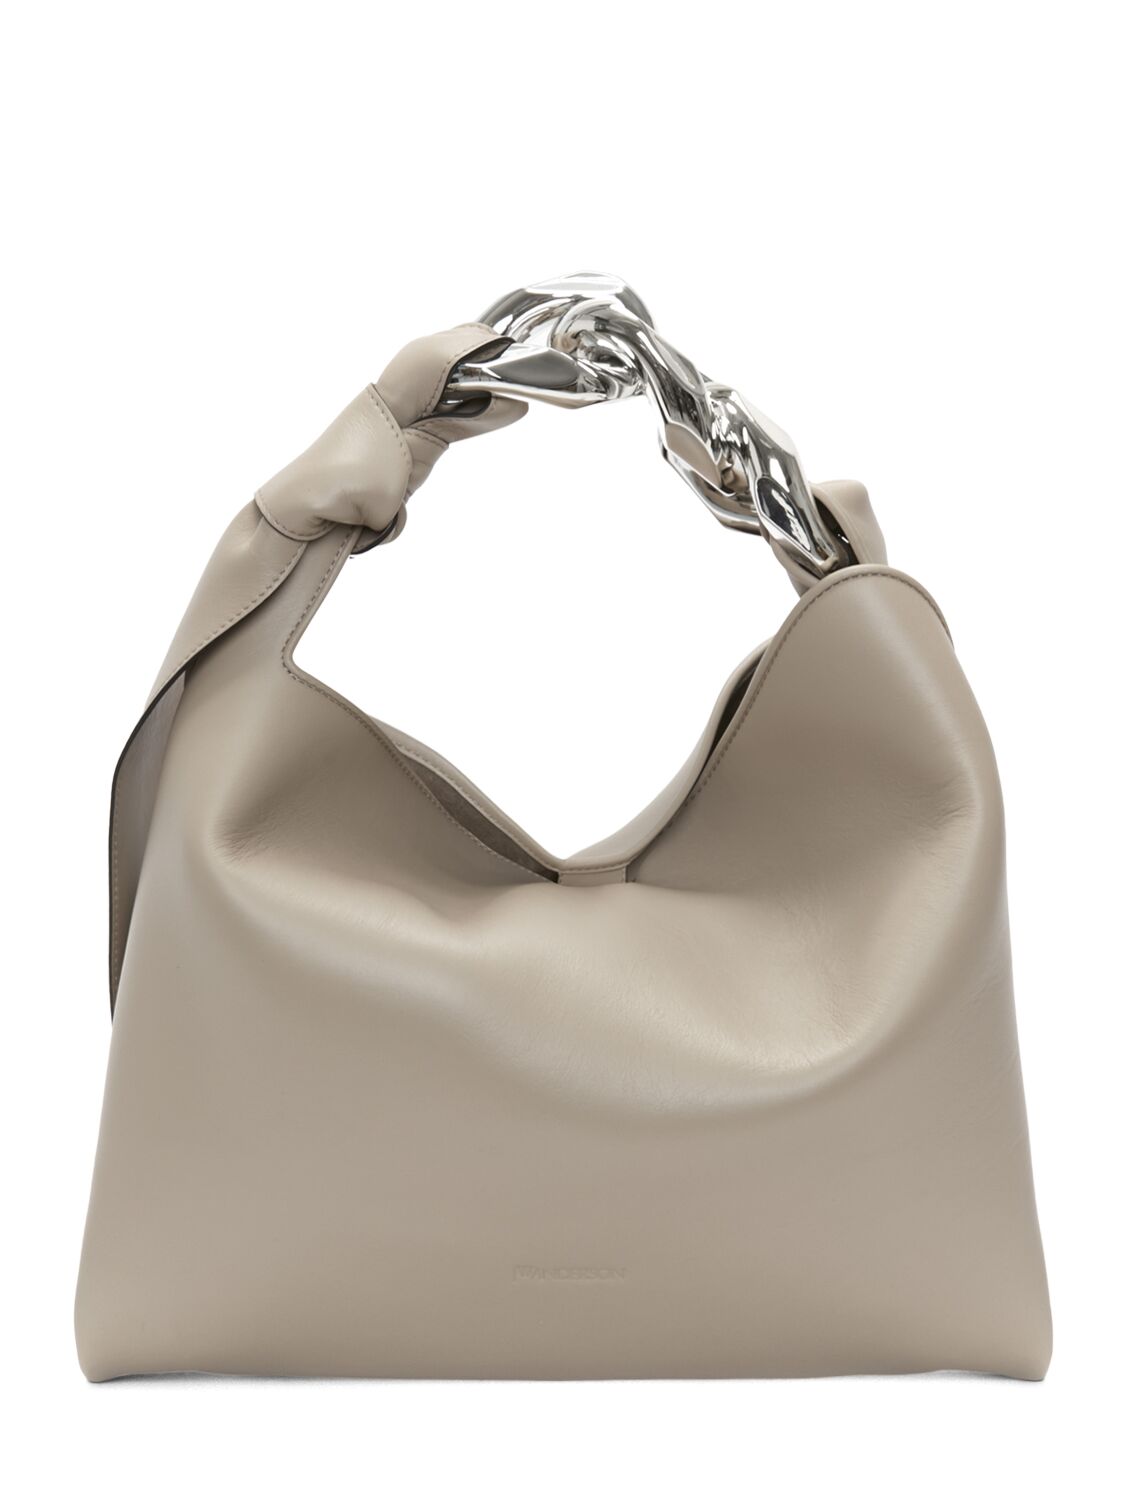 Image of Small Chain Hobo Leather Bag